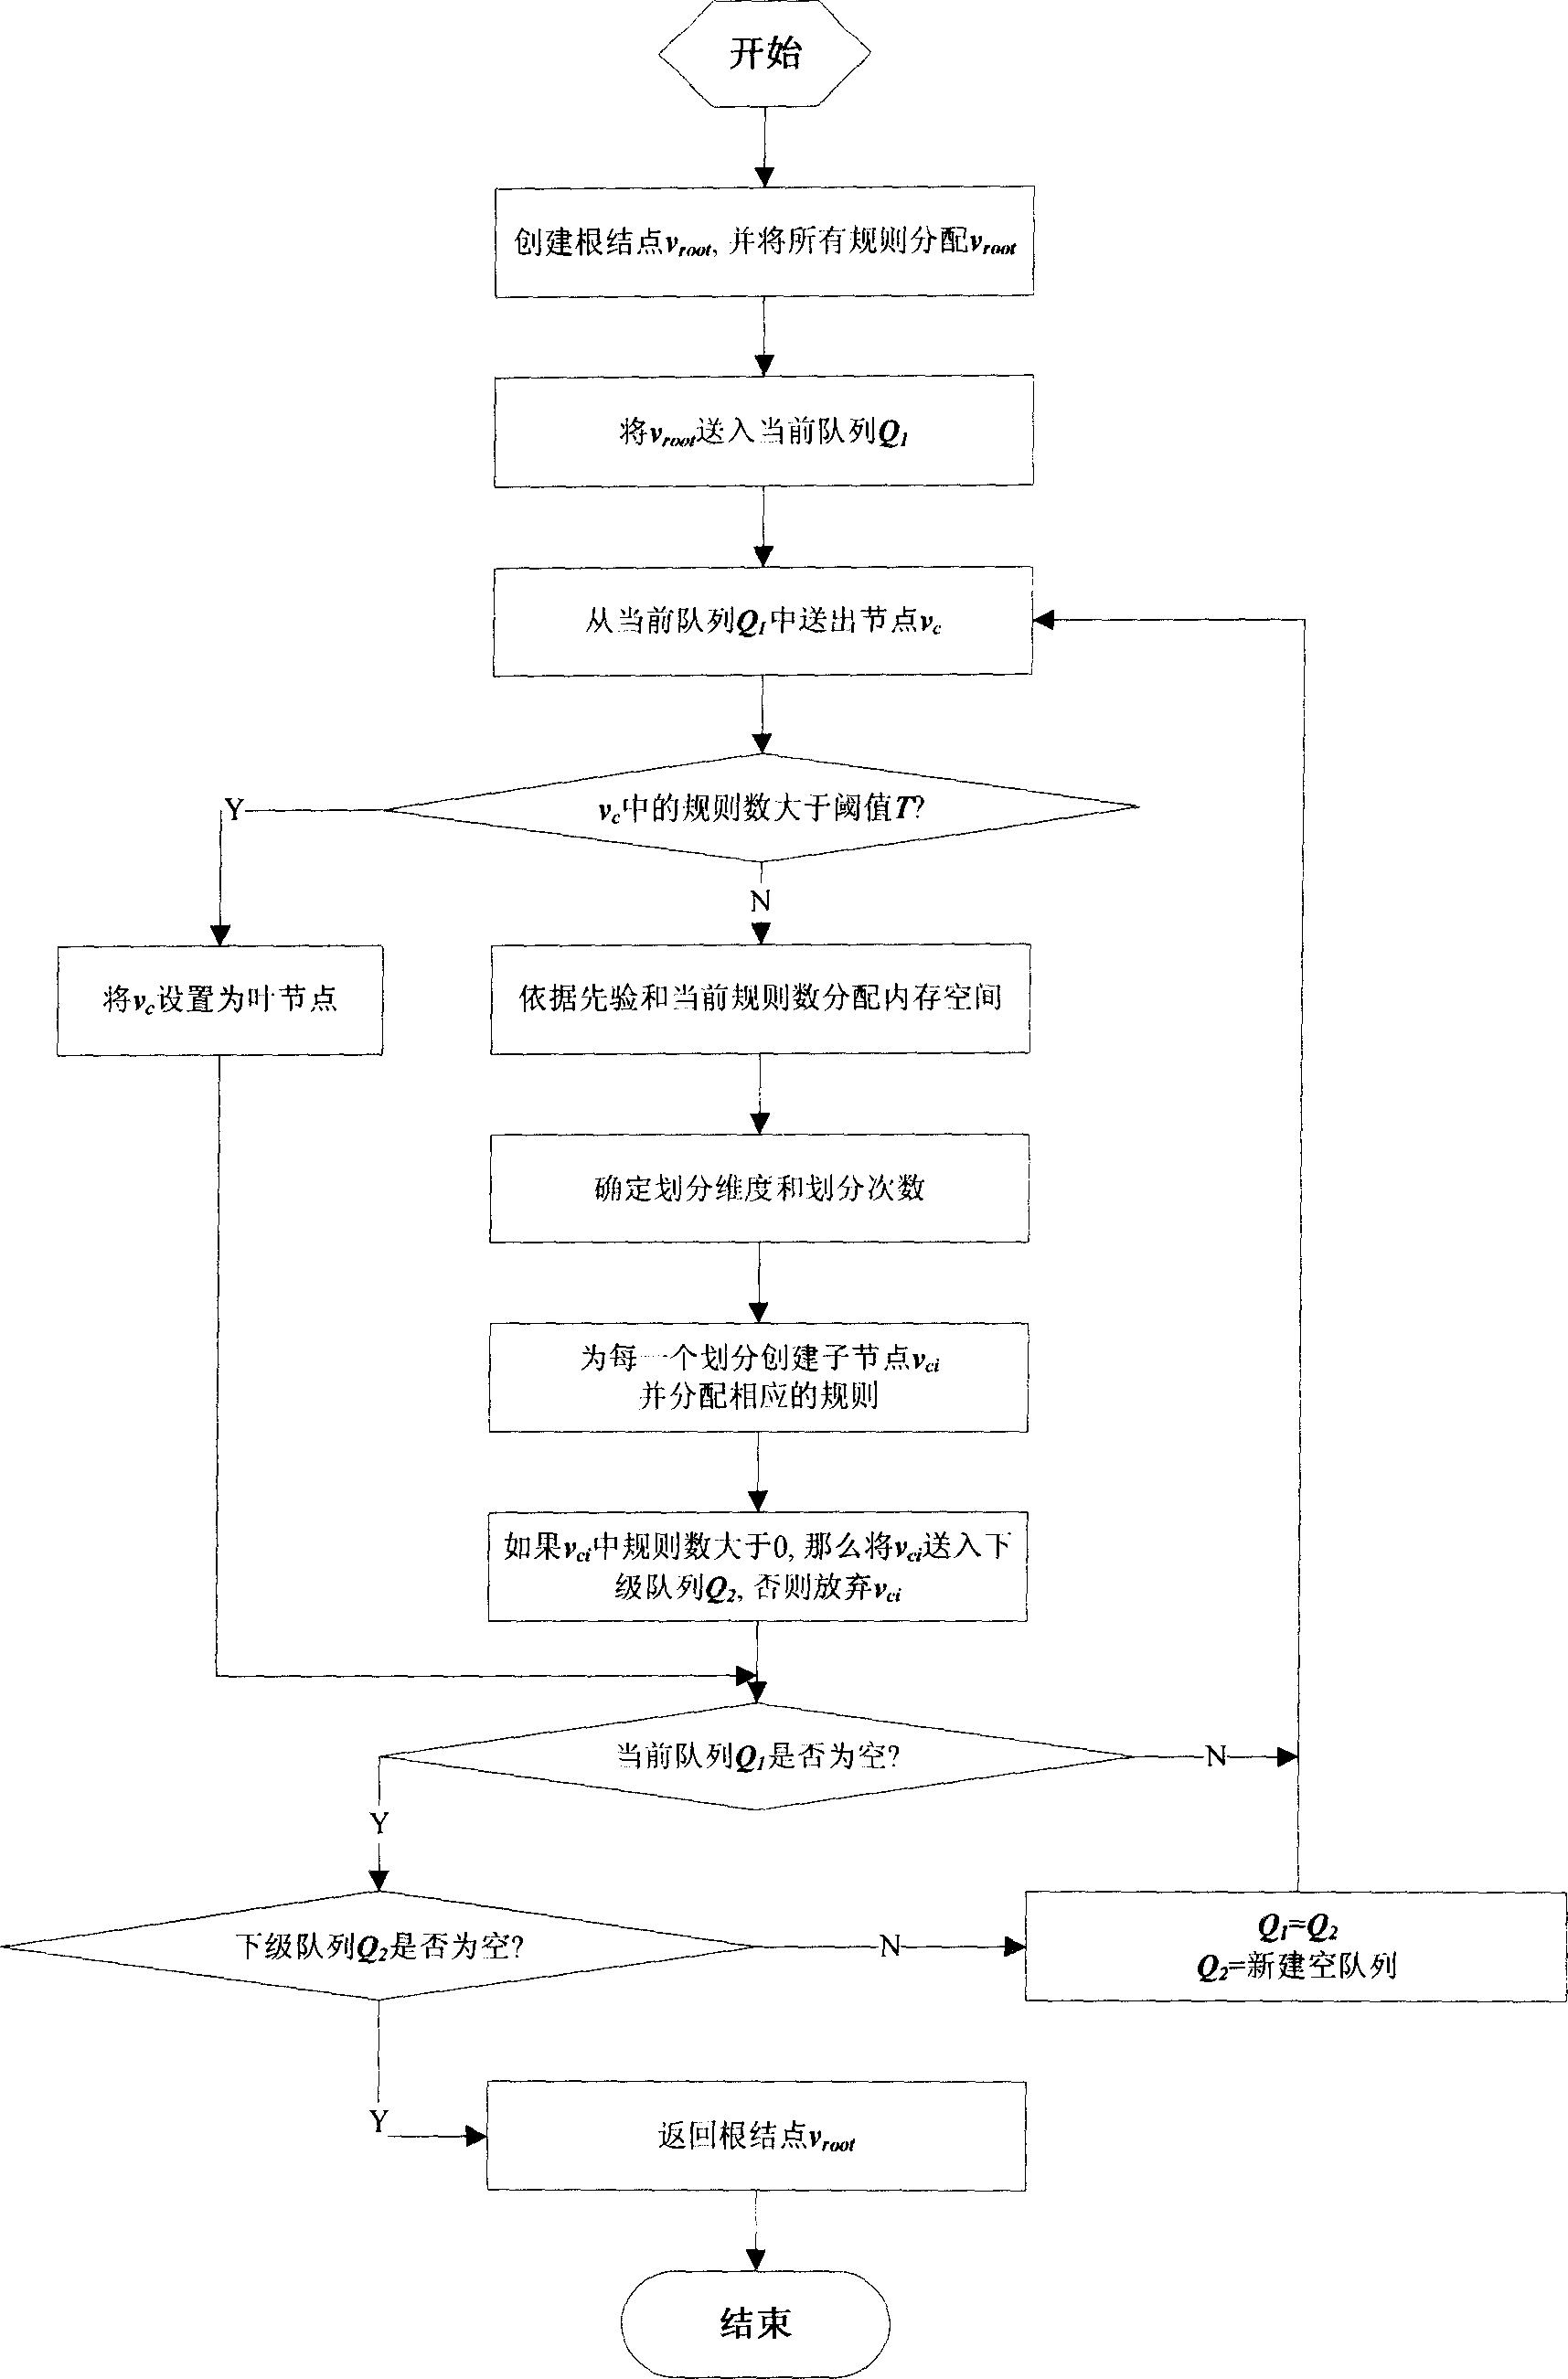 Multi-domain net packet classifying method based on network flow